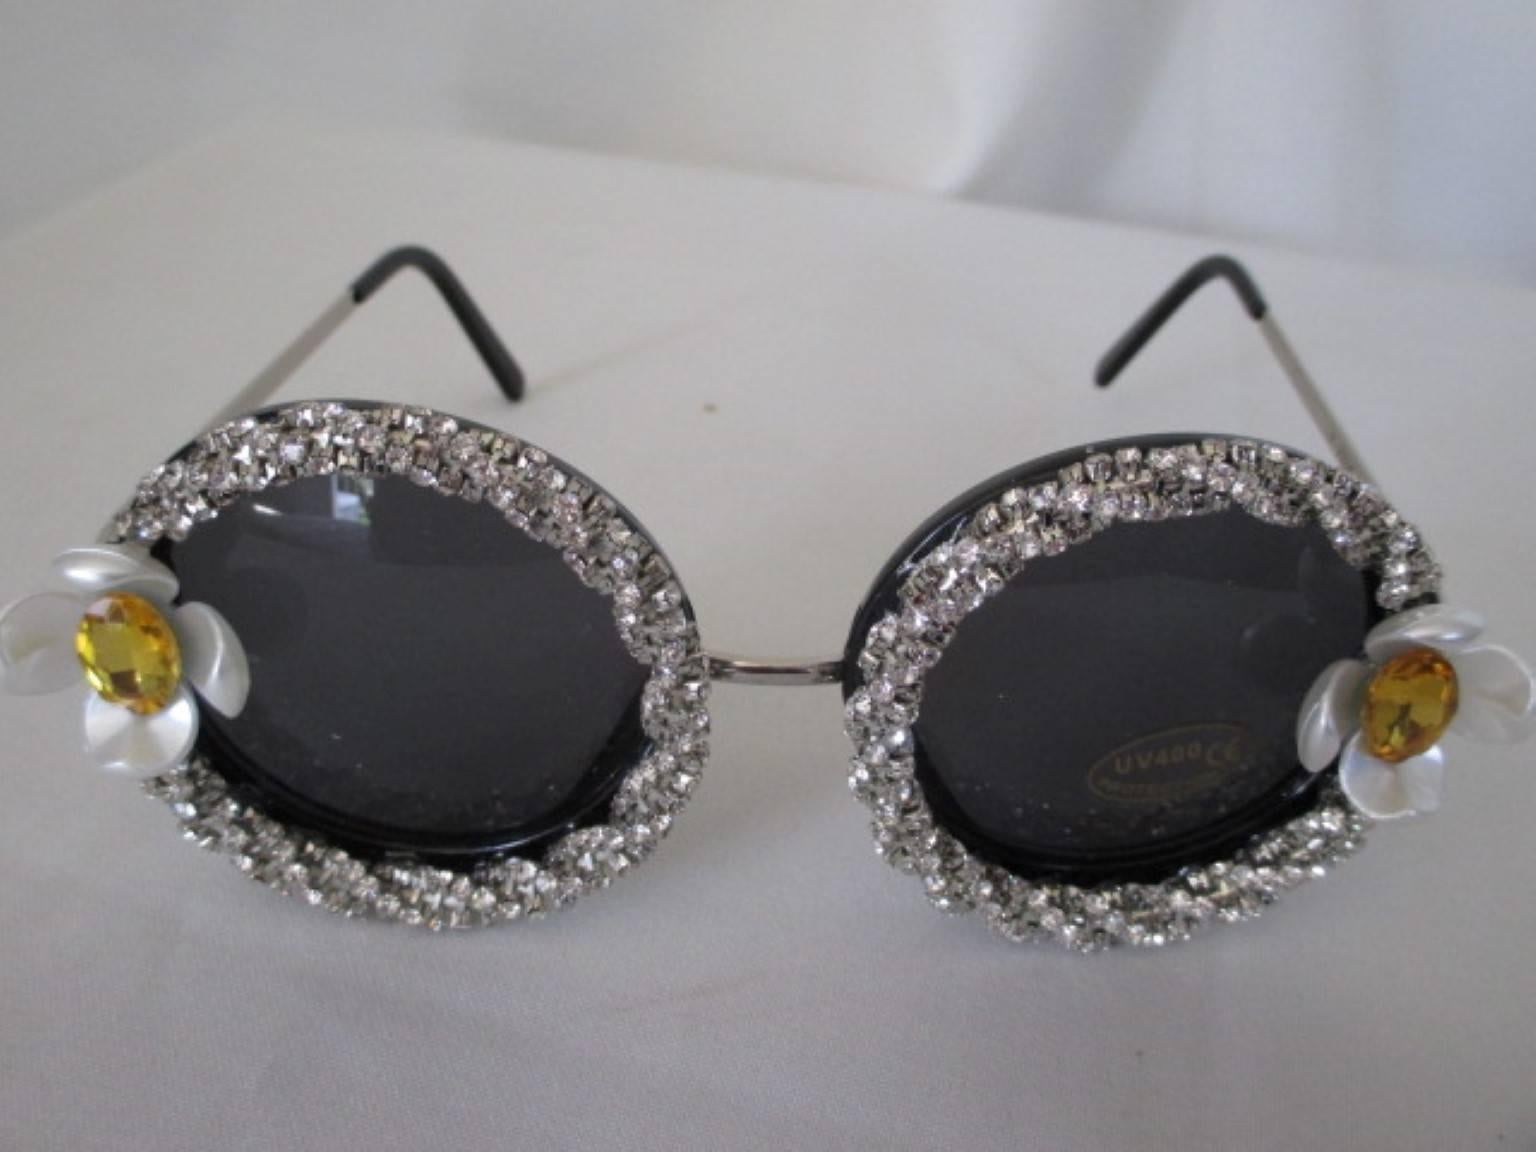 Black handmade fun sunglasses new